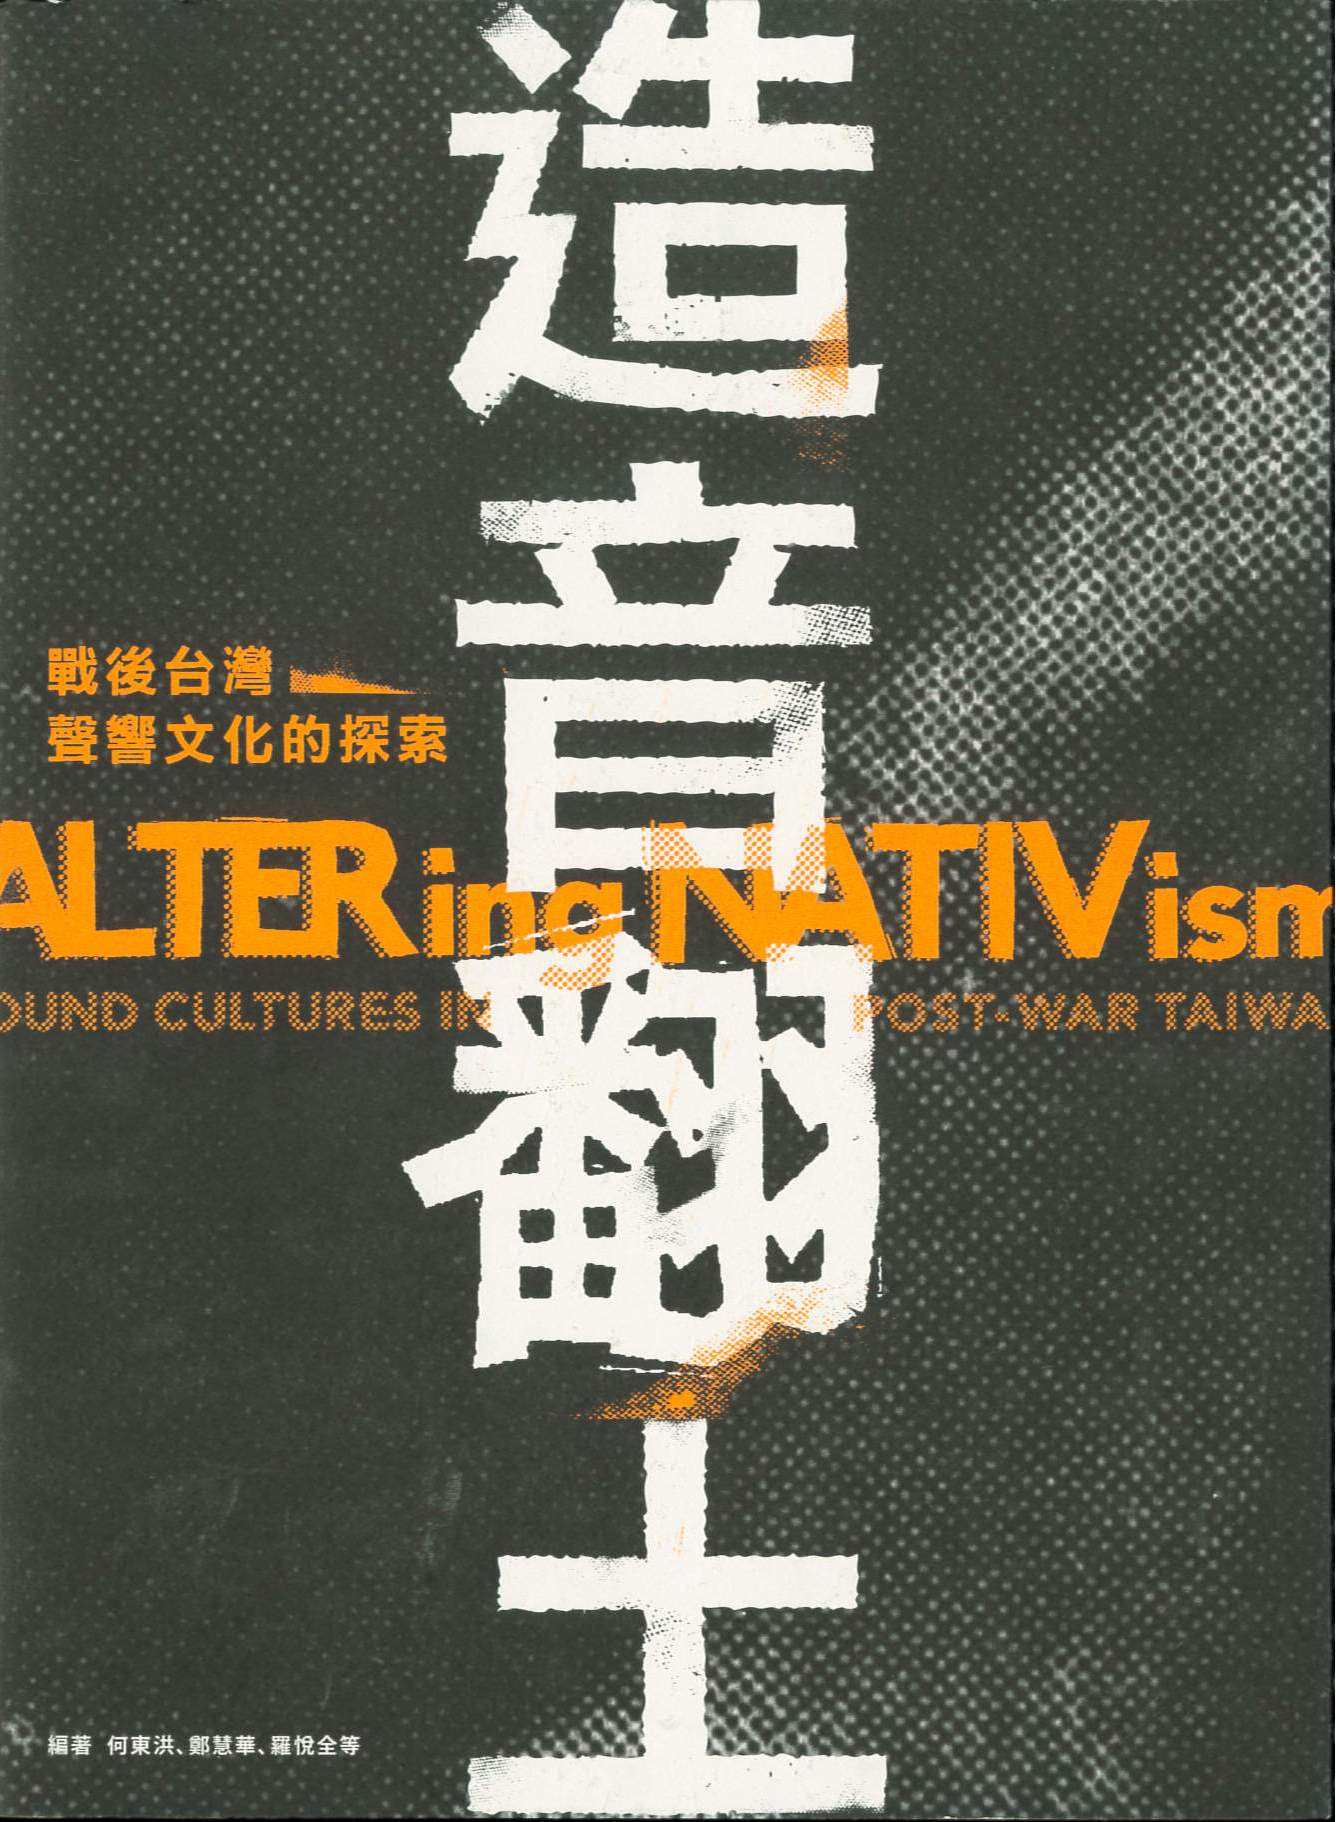 造音翻土 : 戰後台灣聲響文化的探索 = ALTERing NATIVism : sound cultures in post-war Taiwan /